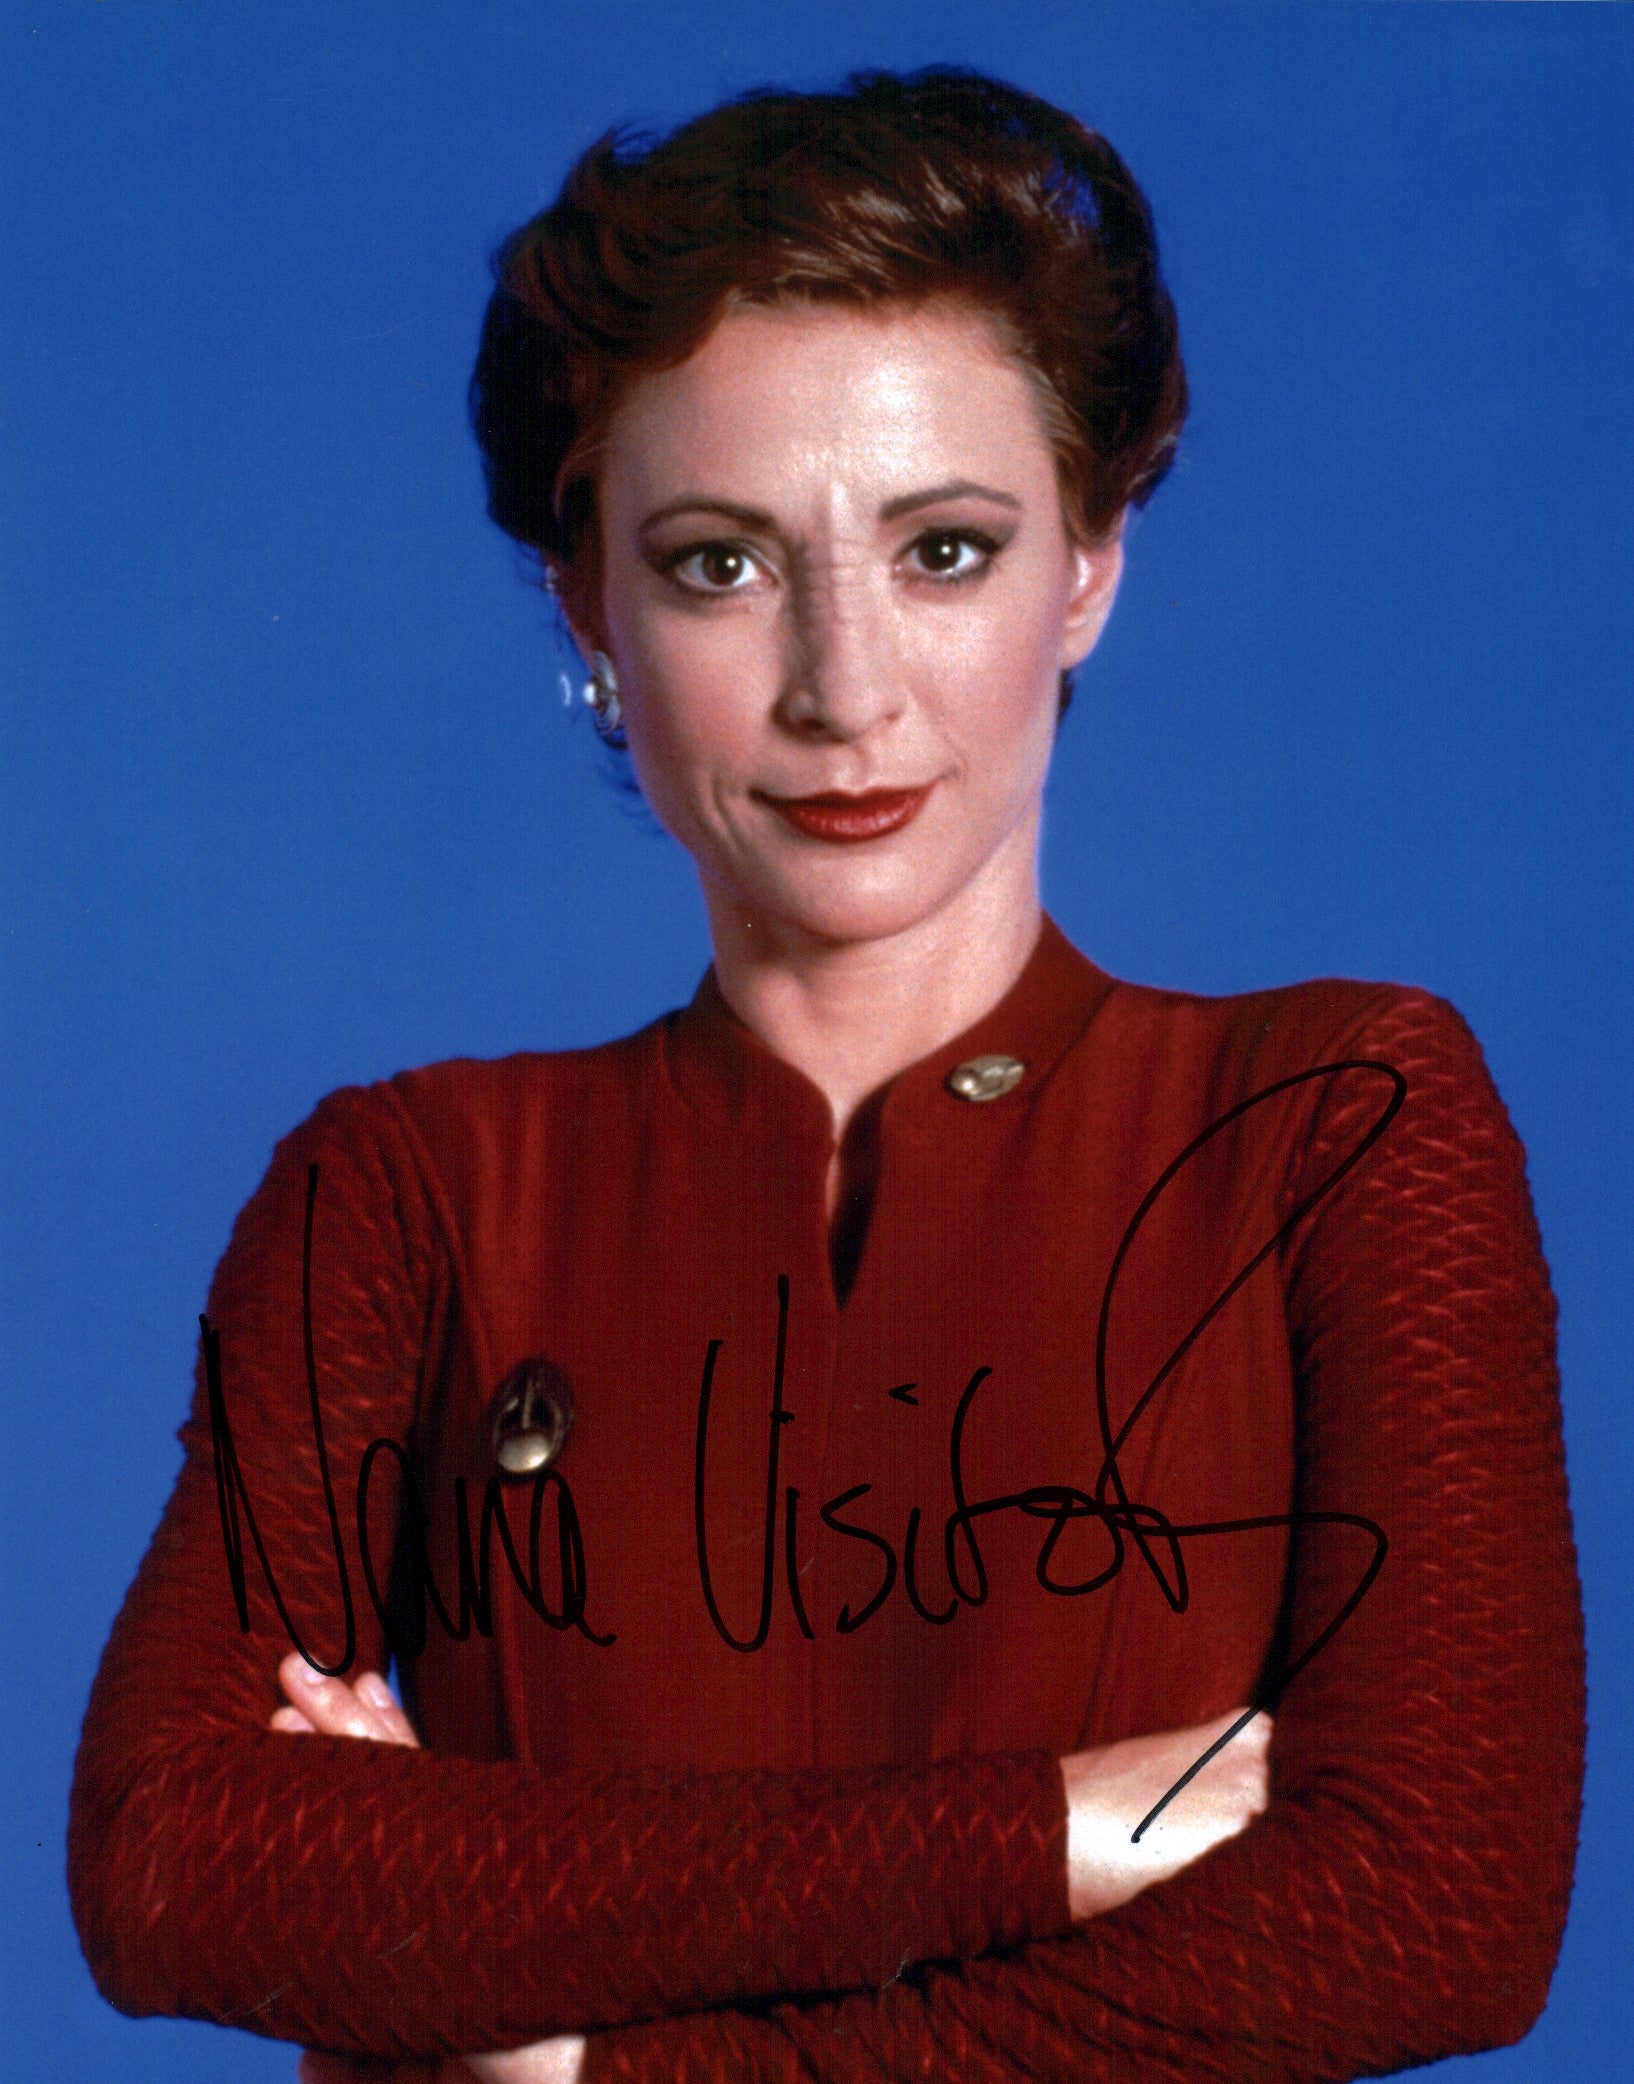 Nana Visitor Star Trek: DS9 11X14 Signed Photo Poster JSA Certified Autograph